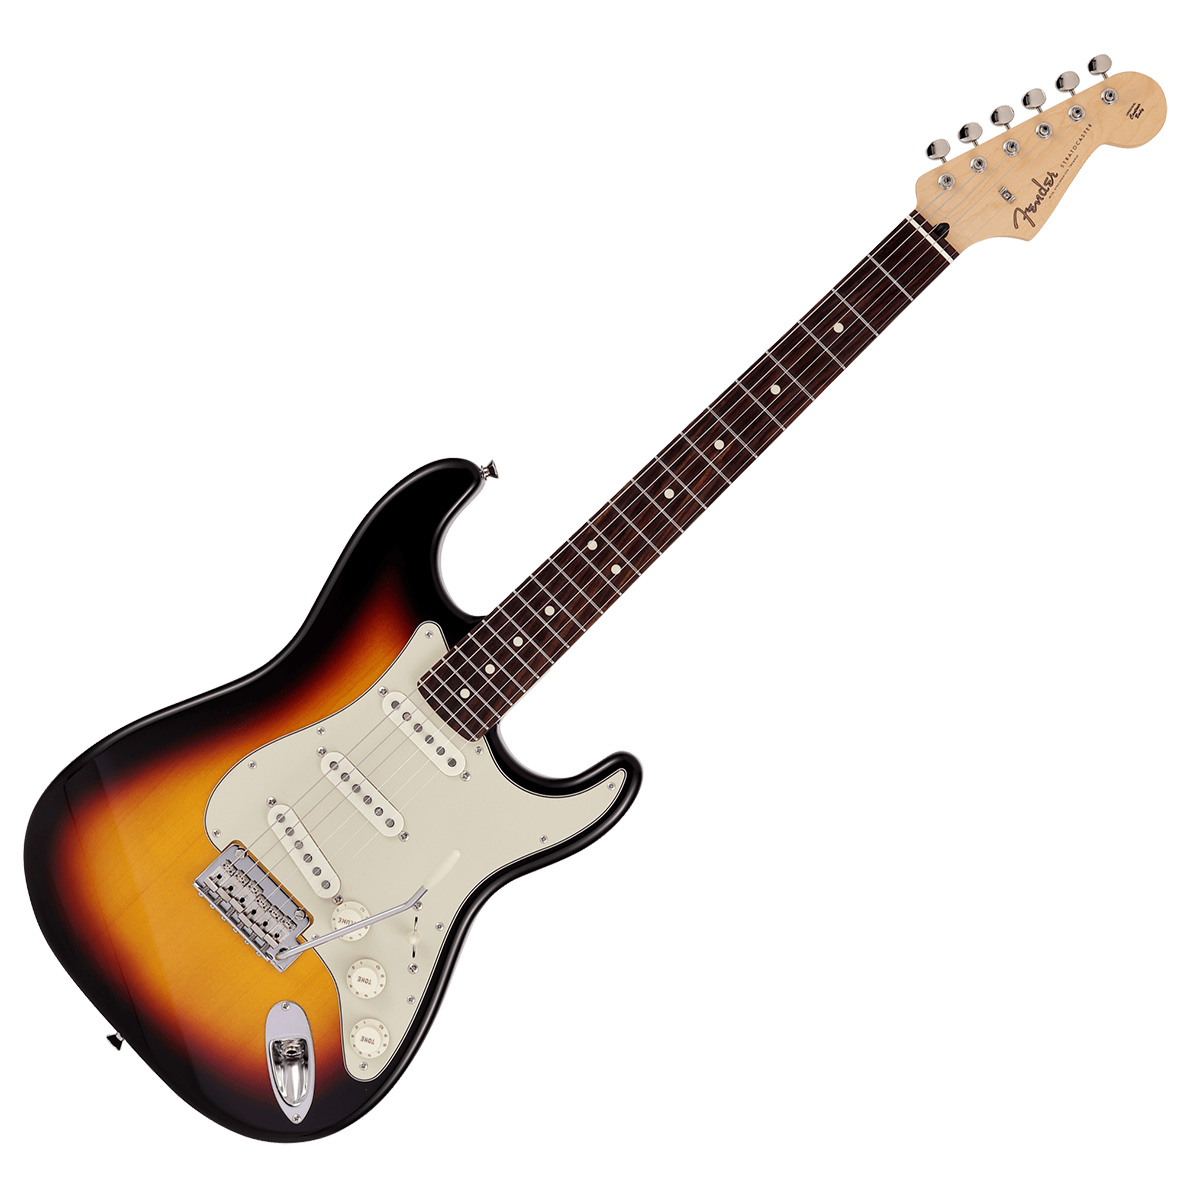 Fender Made in Japan Junior Collection Stratocaster エレキギター ストラトキャスター  ショートスケール フェンダー 【 イオンレイクタウン店 】